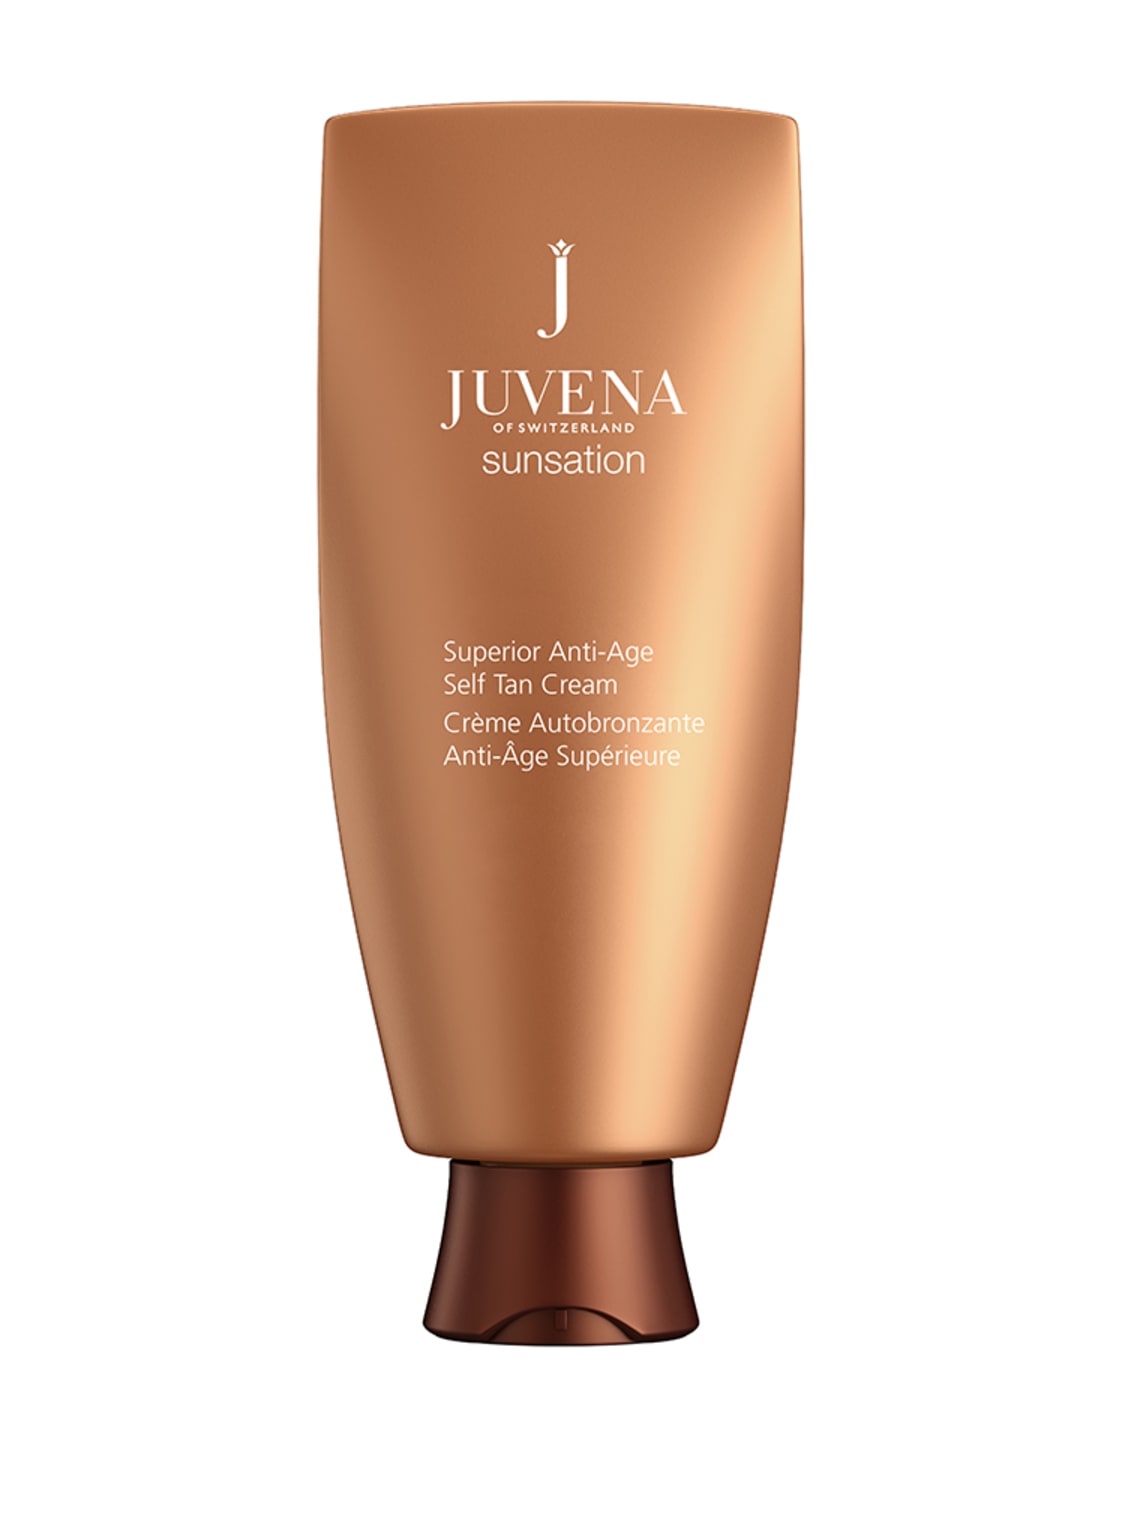 Image of Juvena Sunsation Superior Anti-Age Self Tan Cream 150 ml